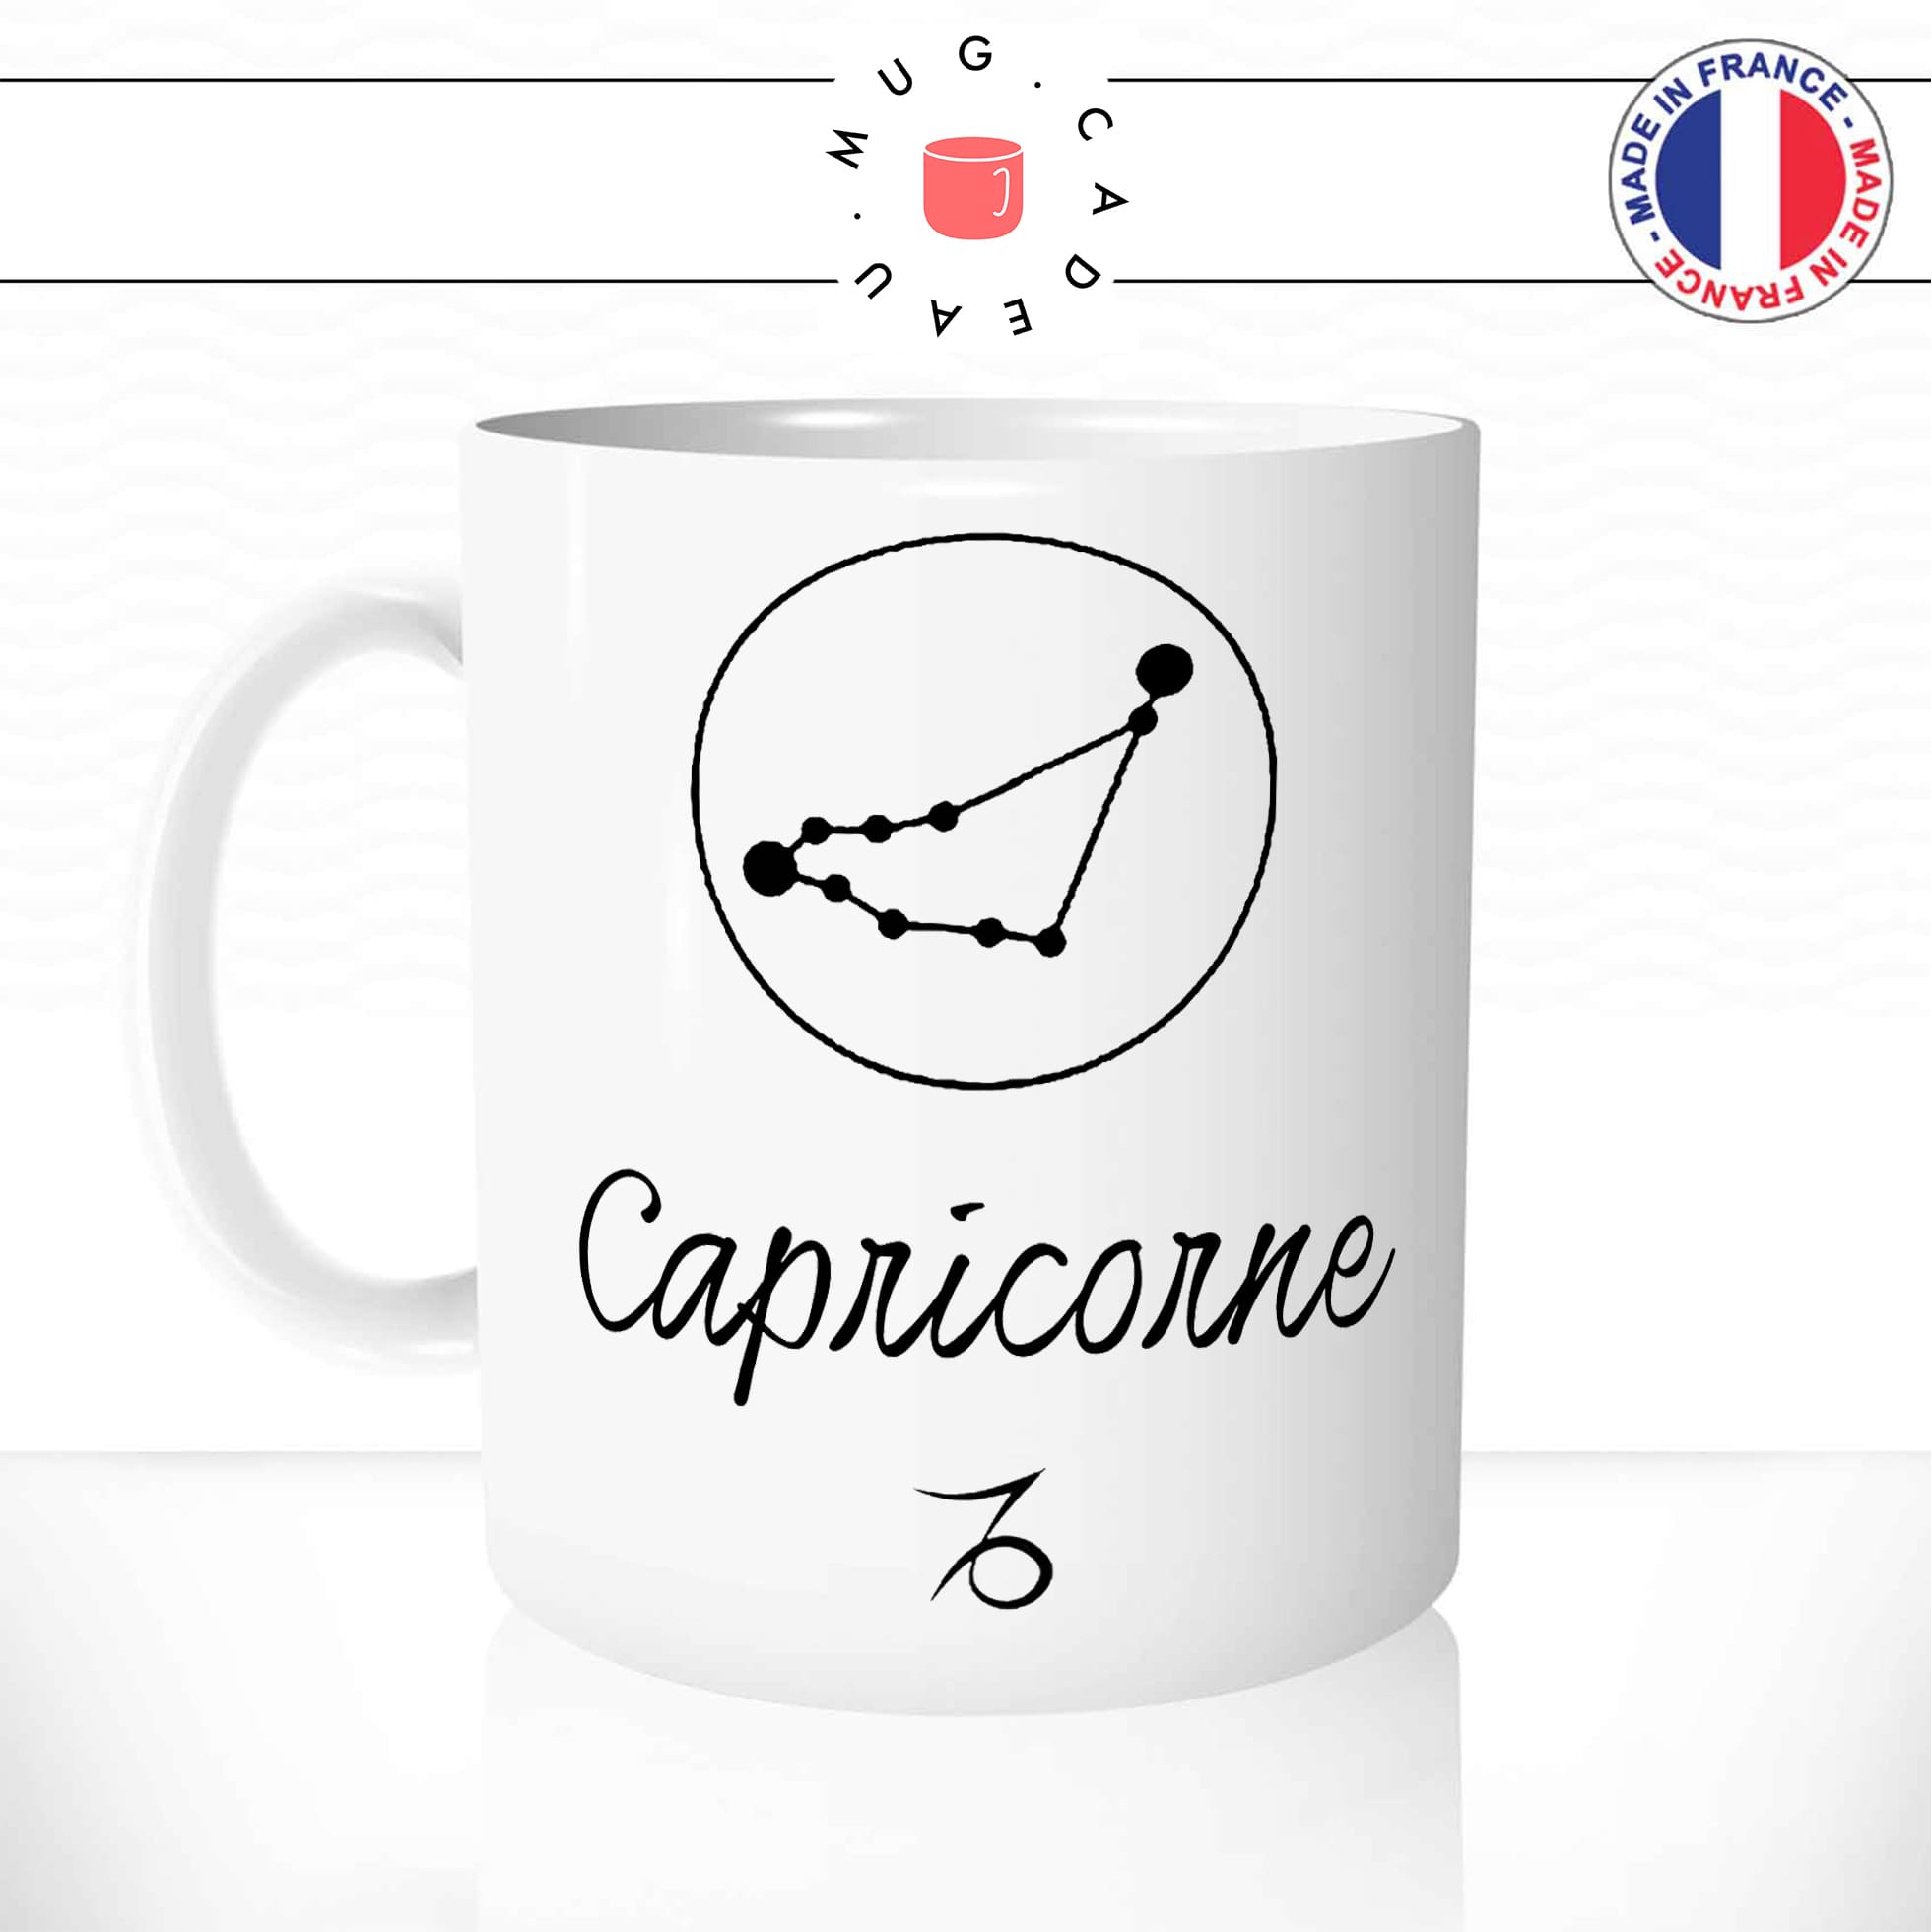 mug-tasse-blanc-signe-astrologique-astro-horoscope-capricorne-étoiles-constellation-ciel-fun-idée-cadeau-originale-personnalisé